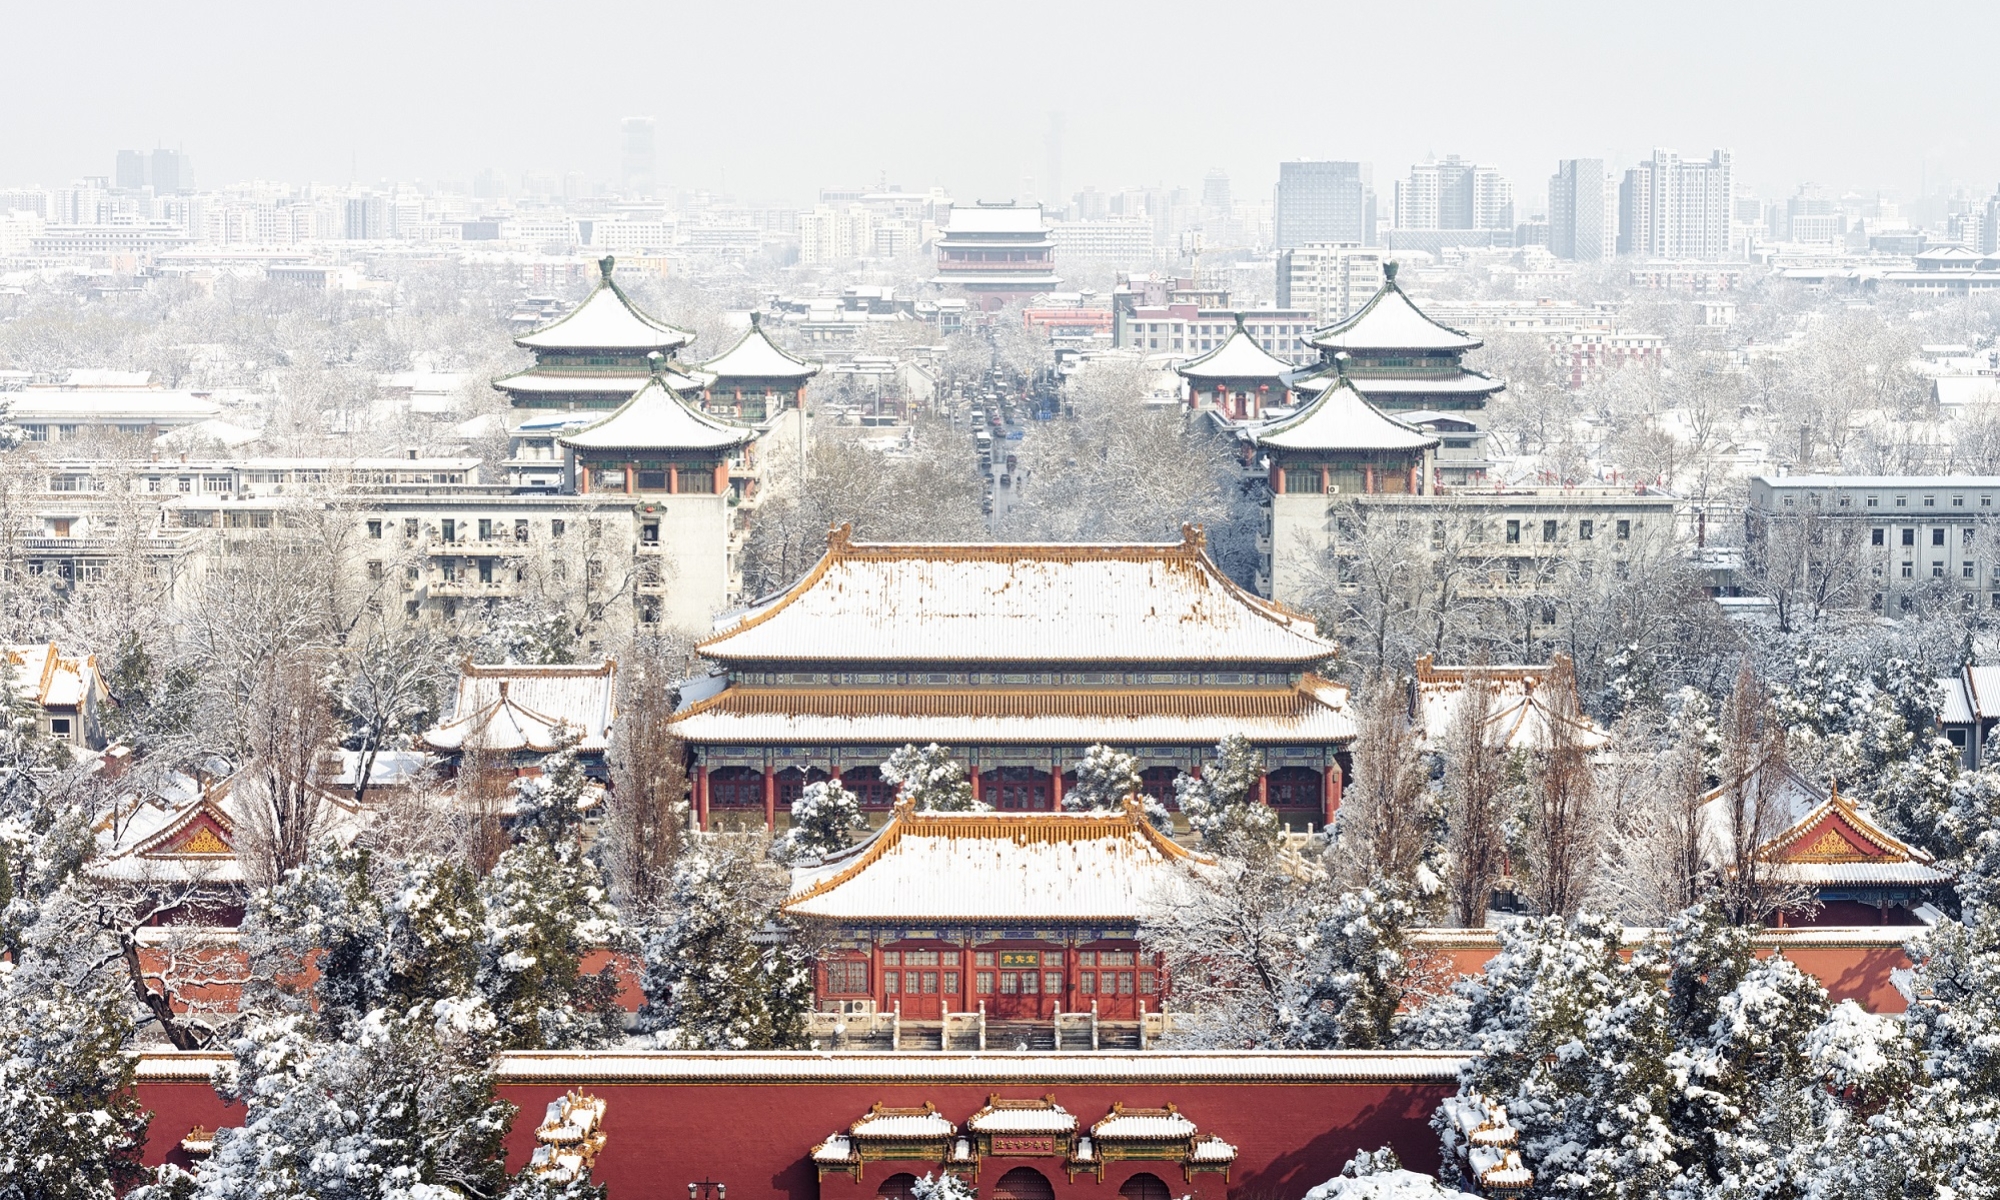 Beijing skyline with snow falling down